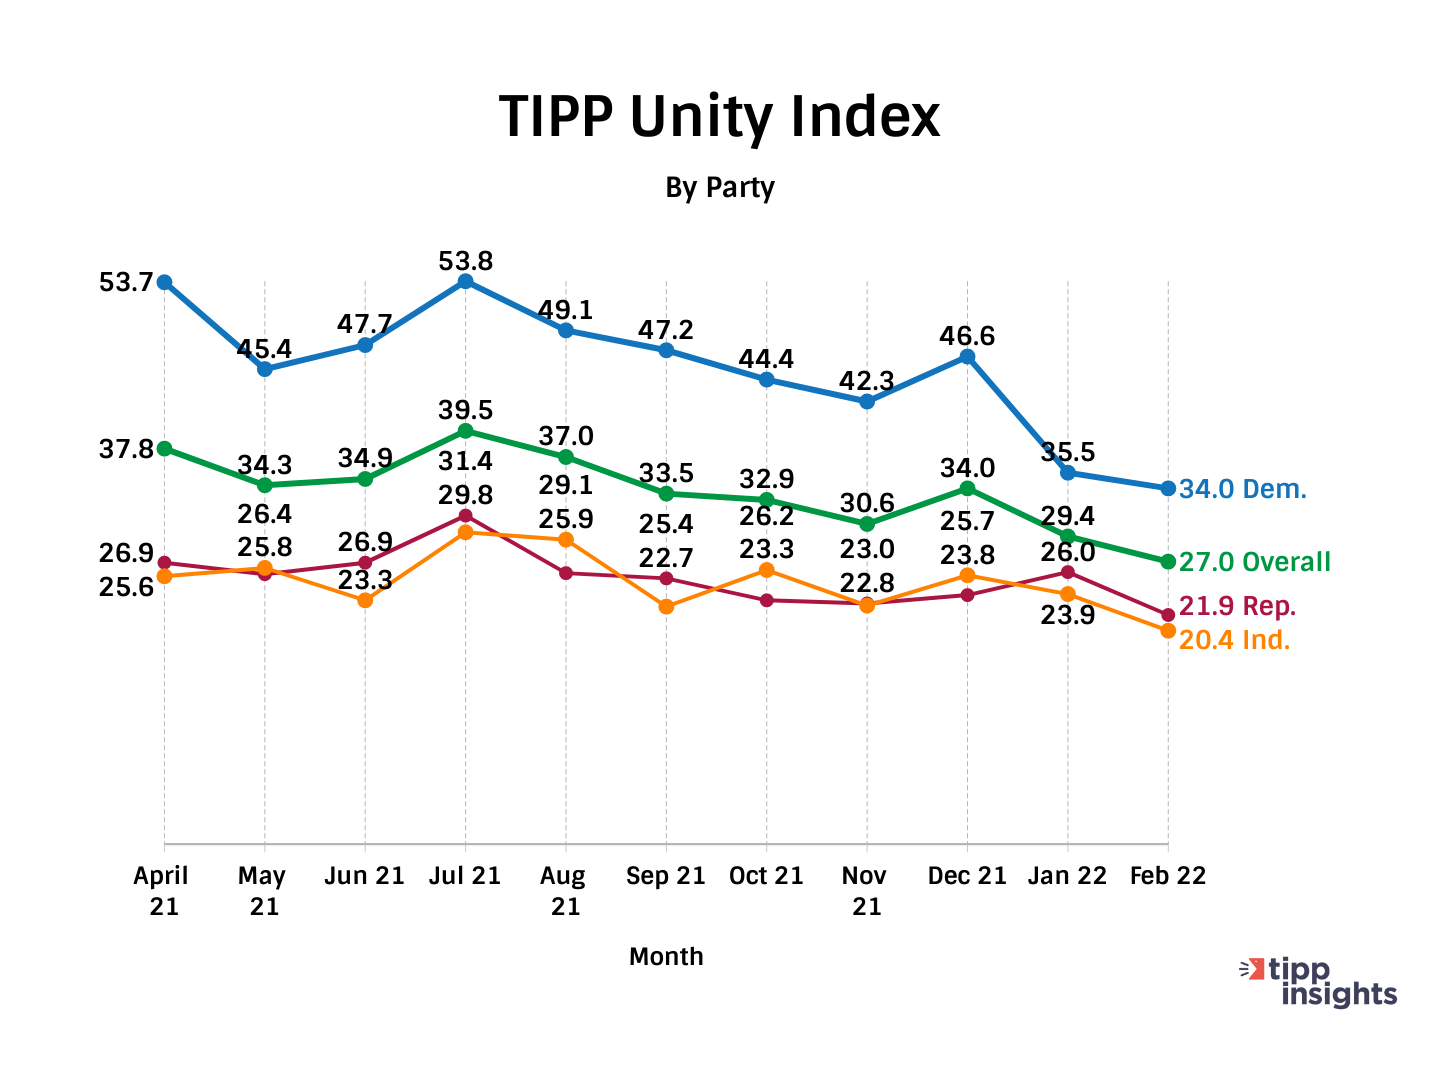 TIPP Unity Index